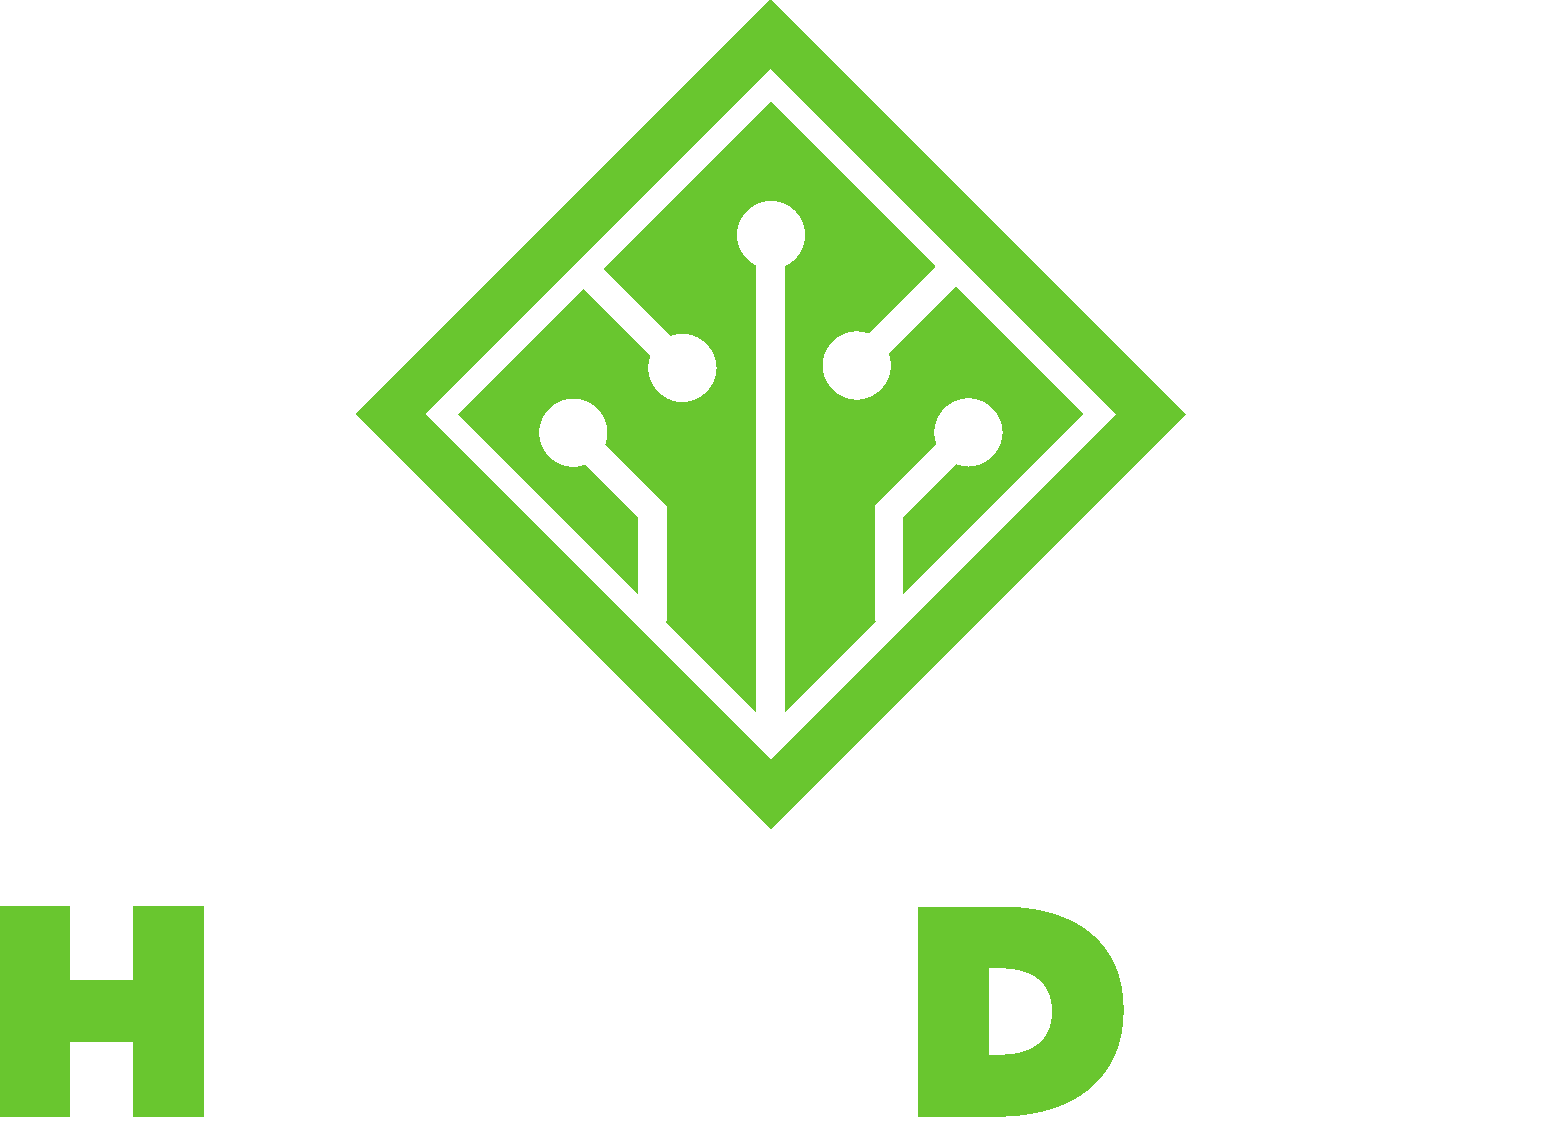 BEST Hack Day logo